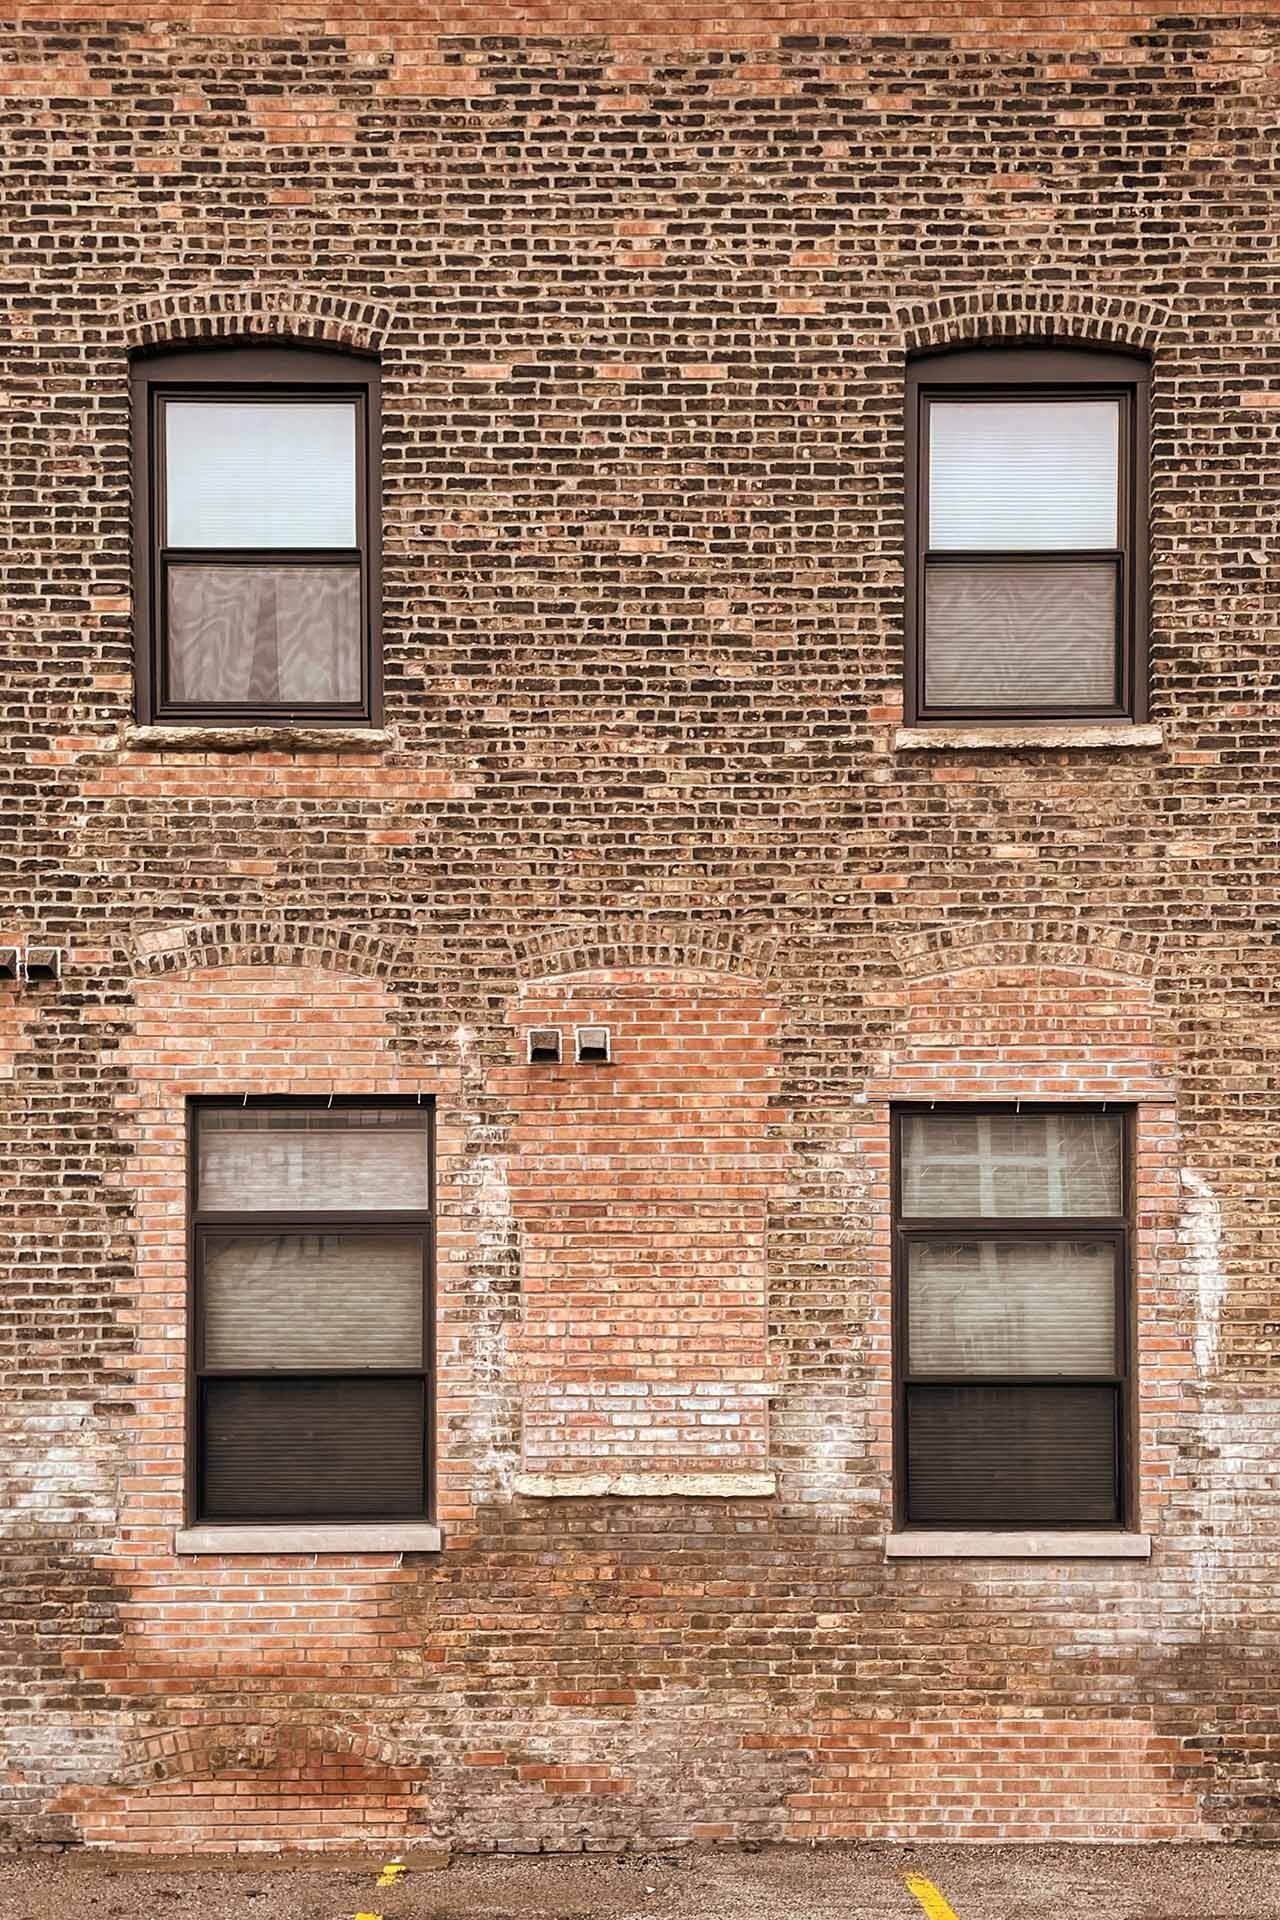 Four windows in a brick wall